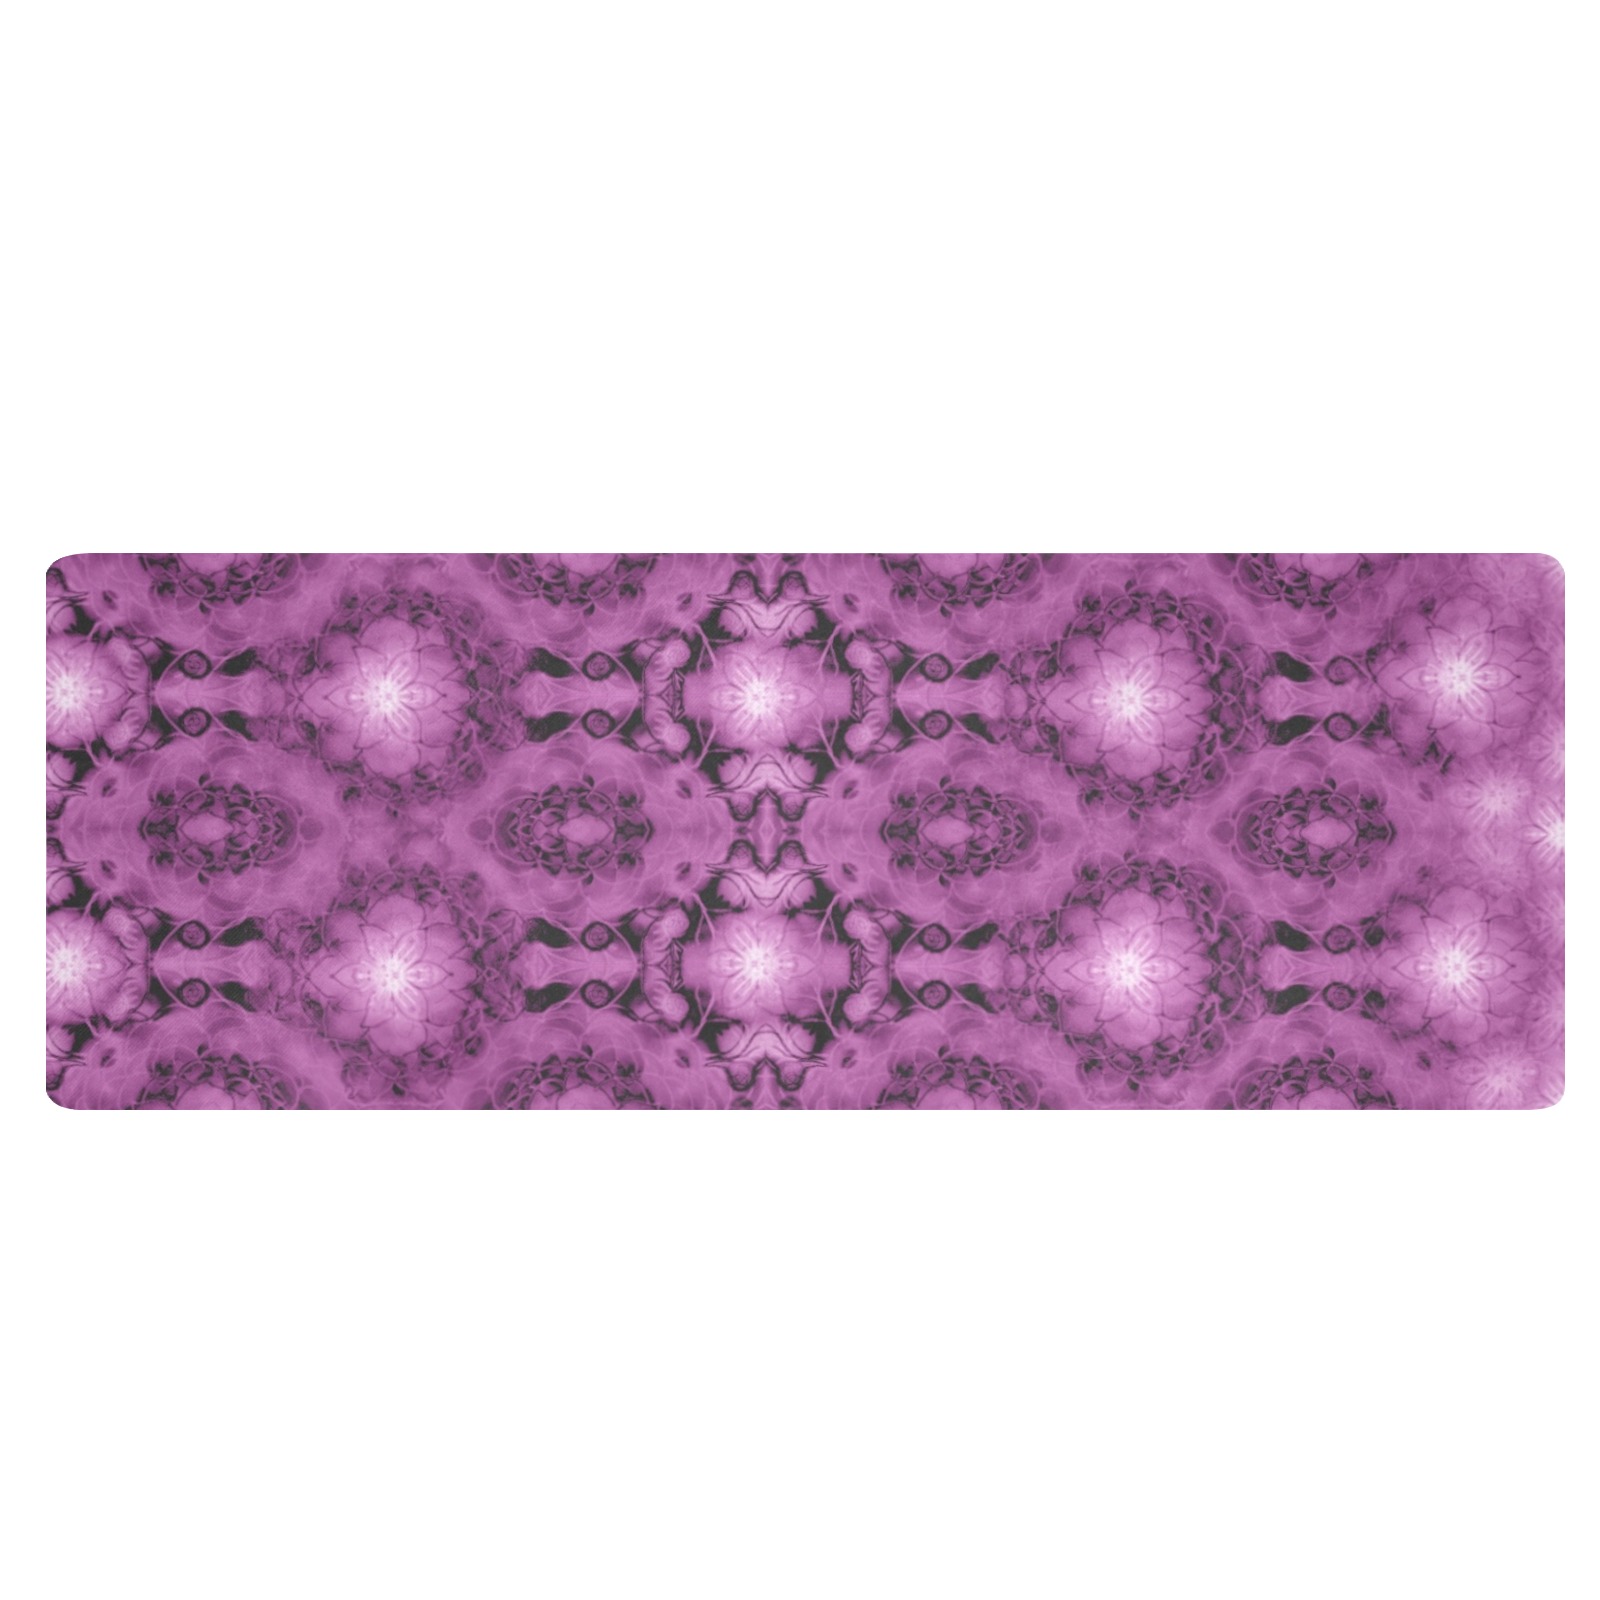 Nidhi decembre 2014-pattern 7-44x55 inches-purple Kitchen Mat 48"x17"